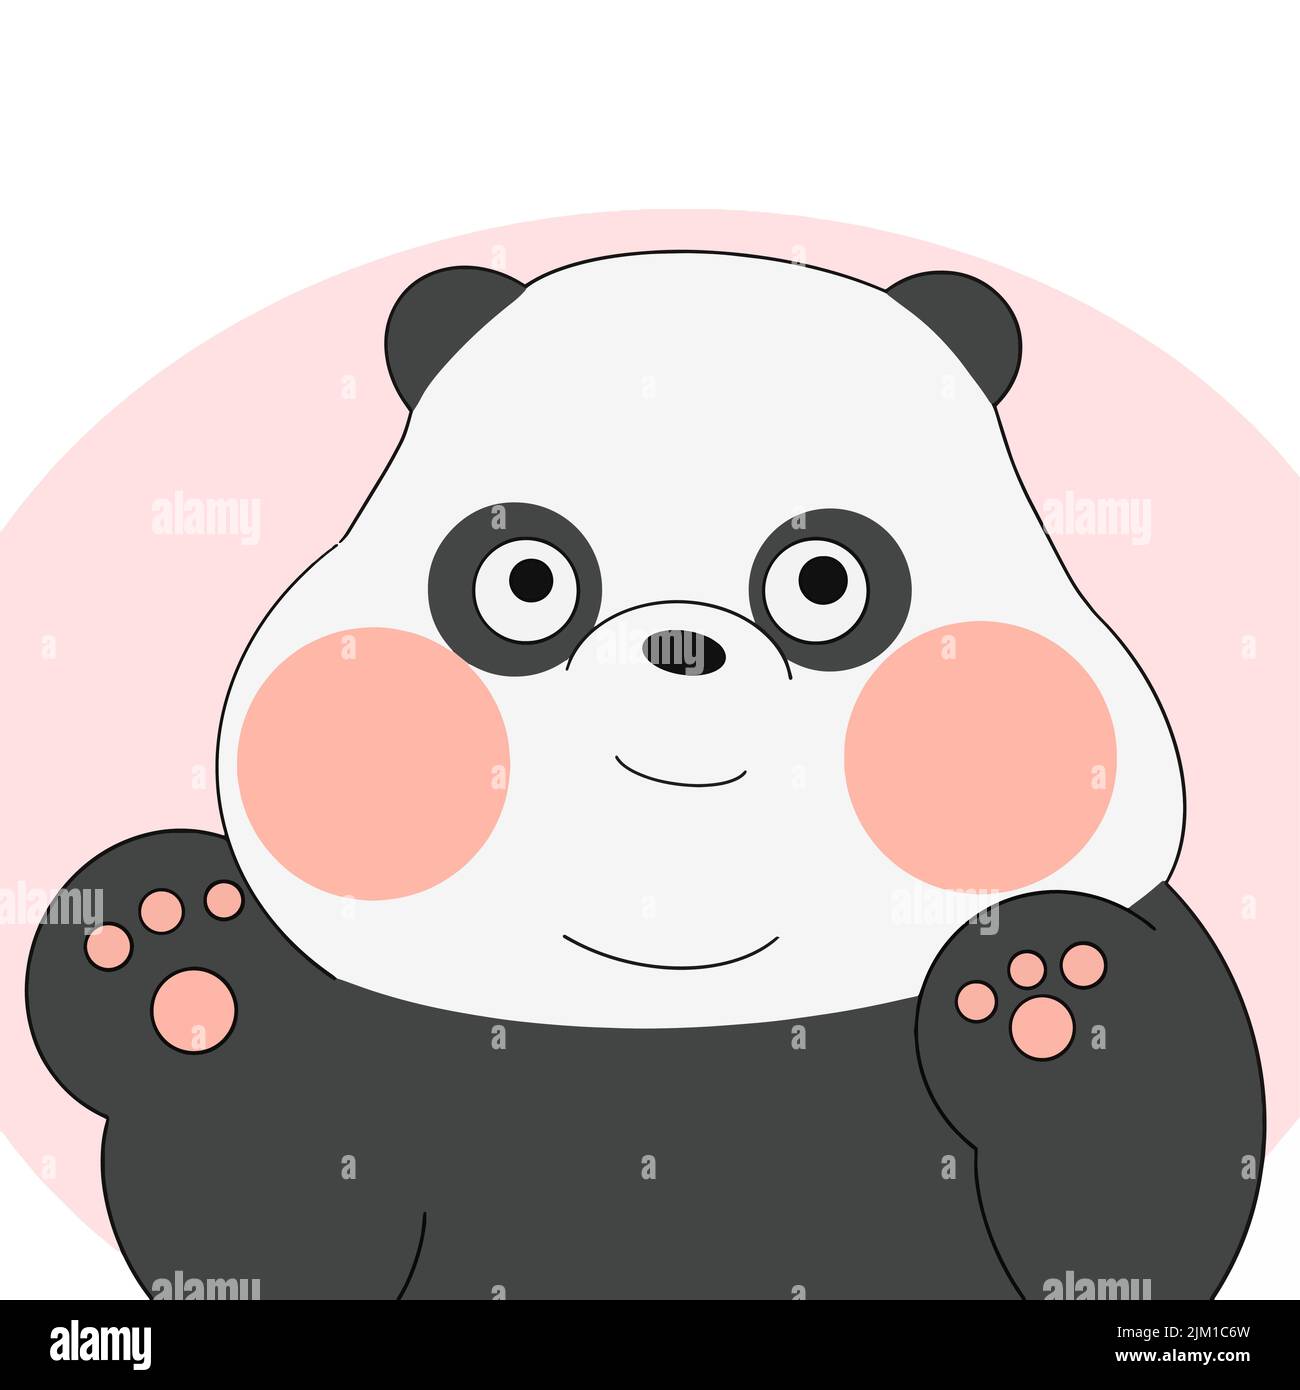 Cute Panda (12 Animated GIFs) – Toon Characters